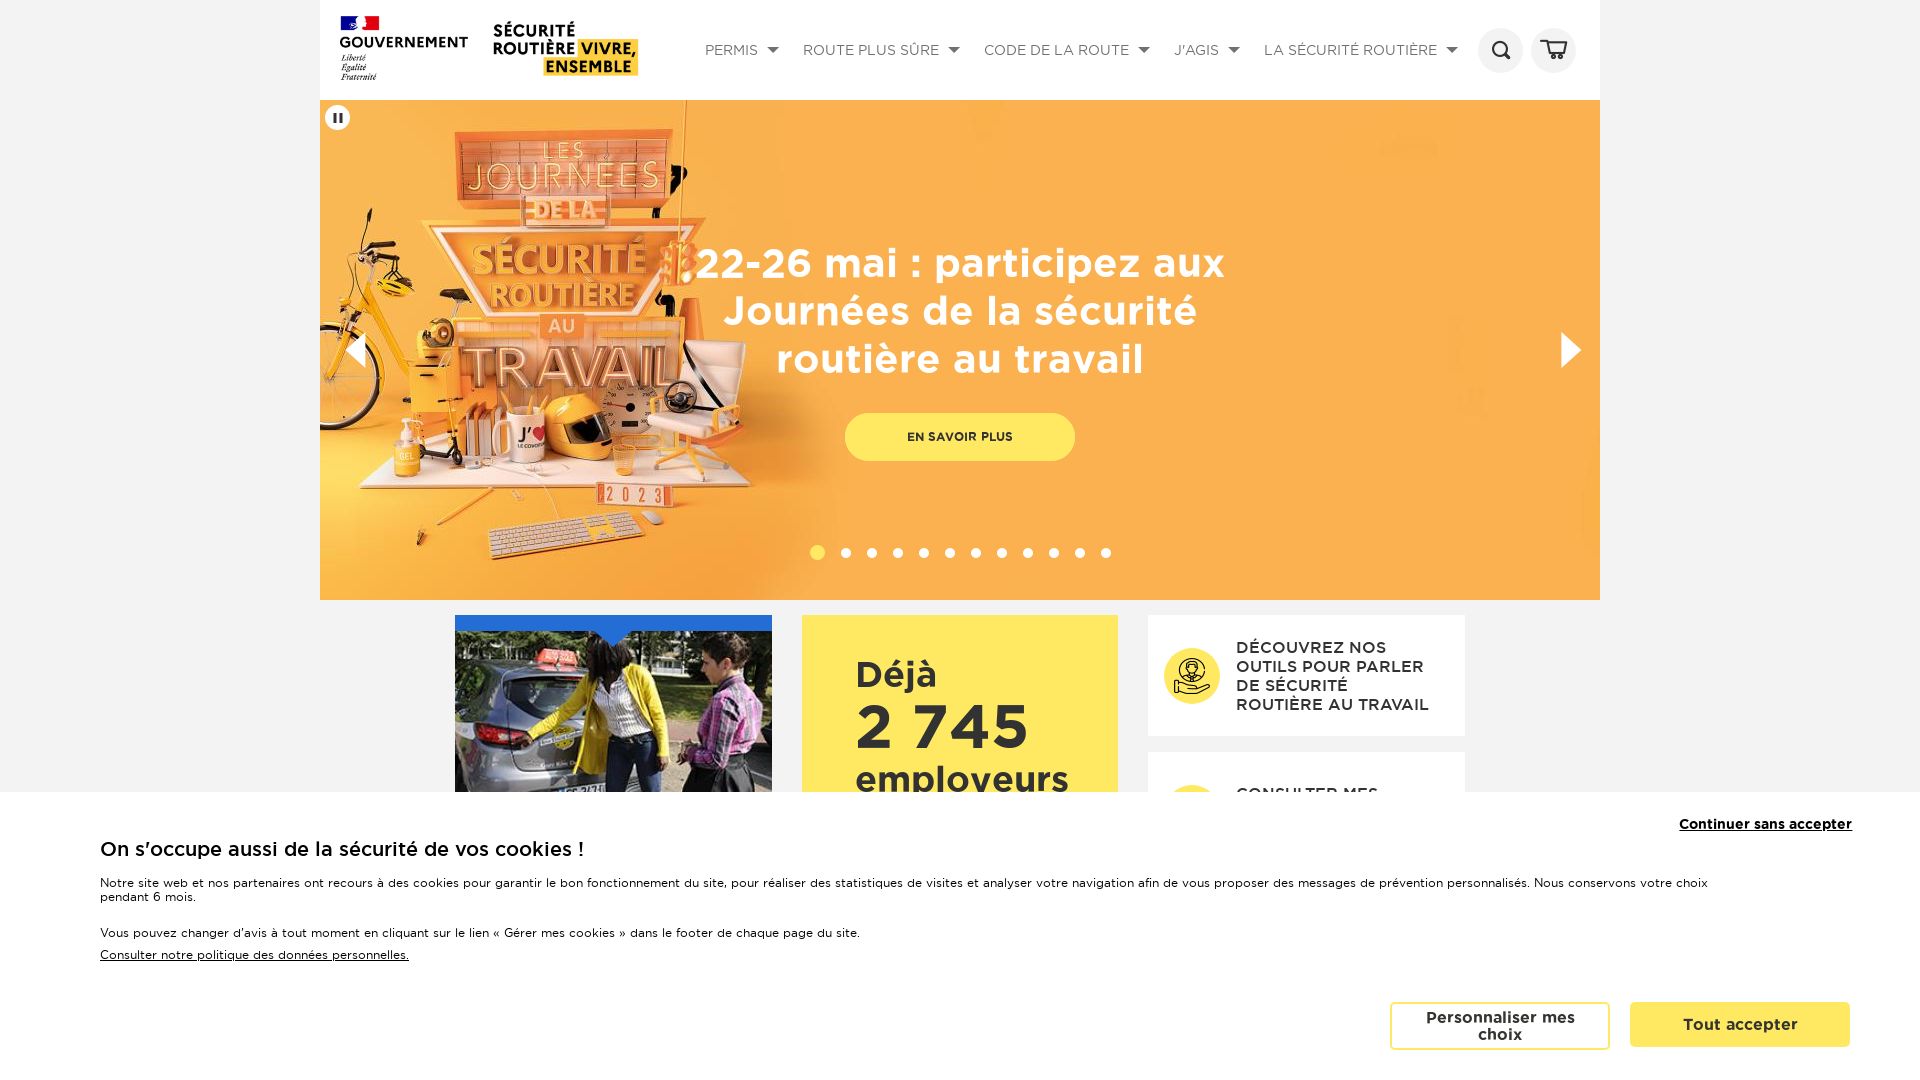 Estado web www.securite-routiere.gouv.fr está   ONLINE